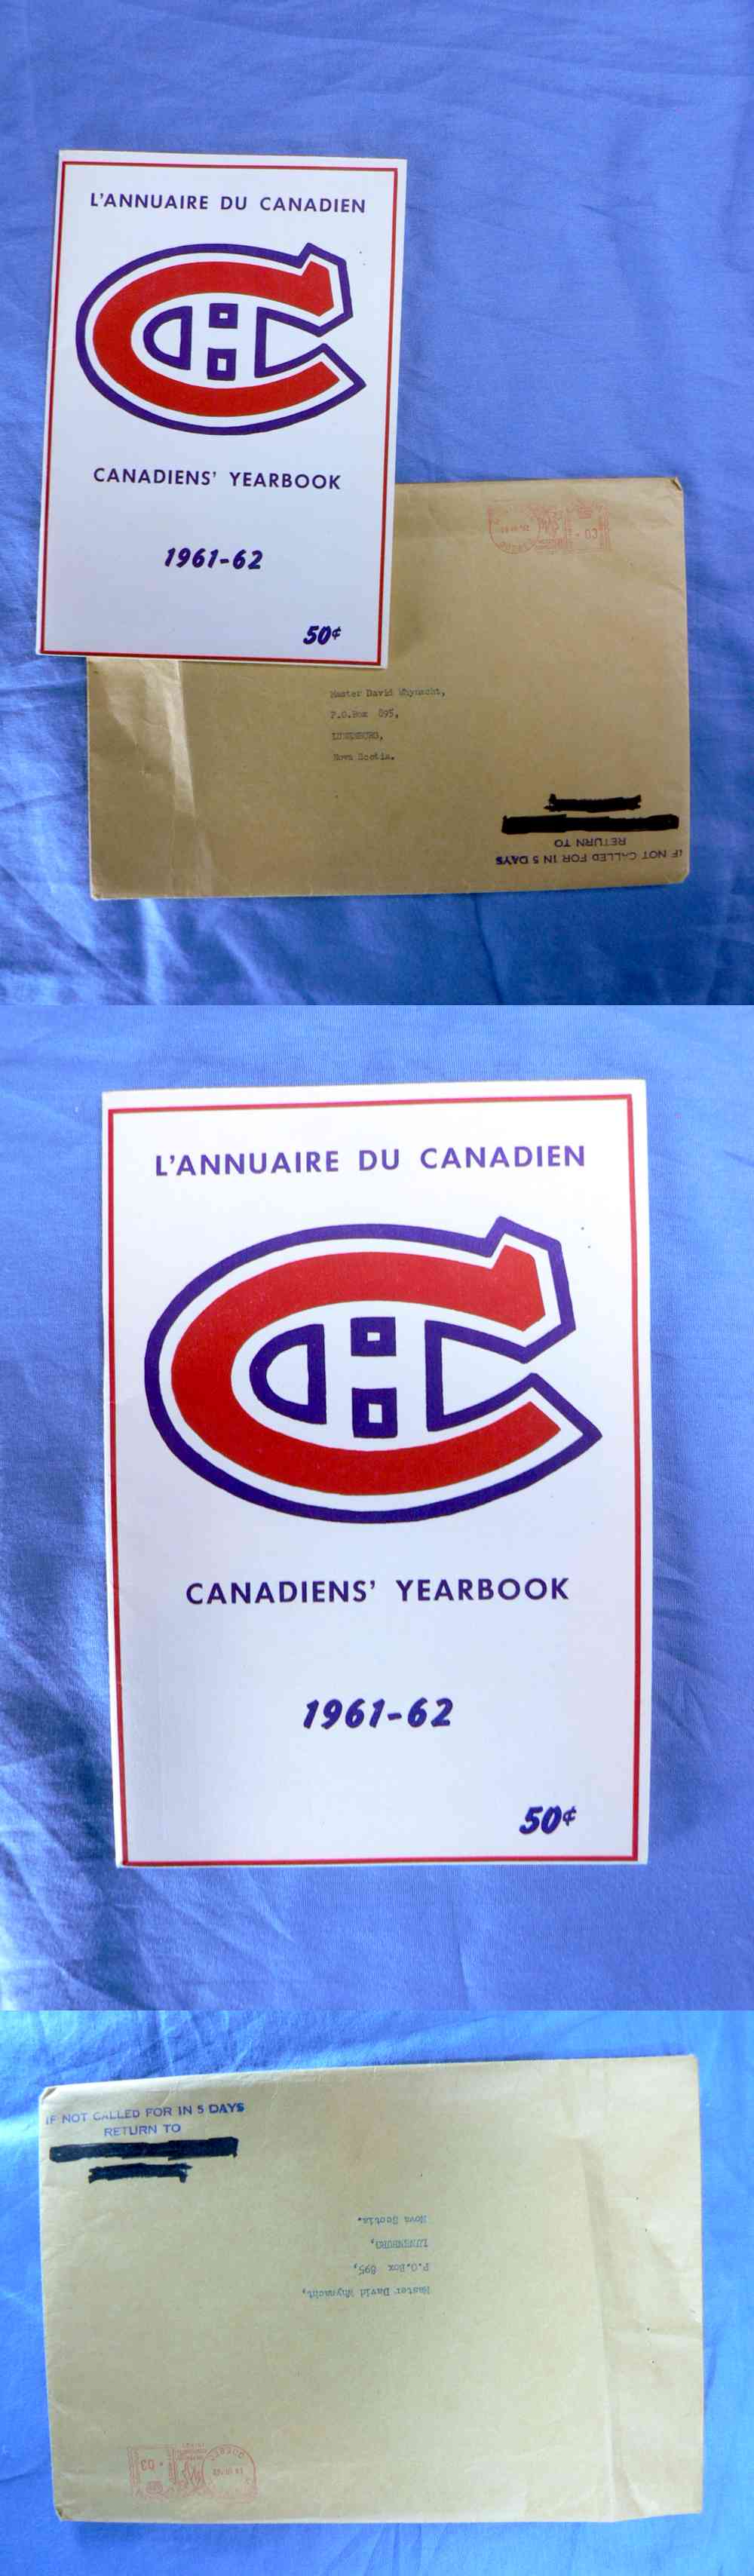 1961-62 MONTREAL CANADIENS YEARBOOK & ENVELOPE photo